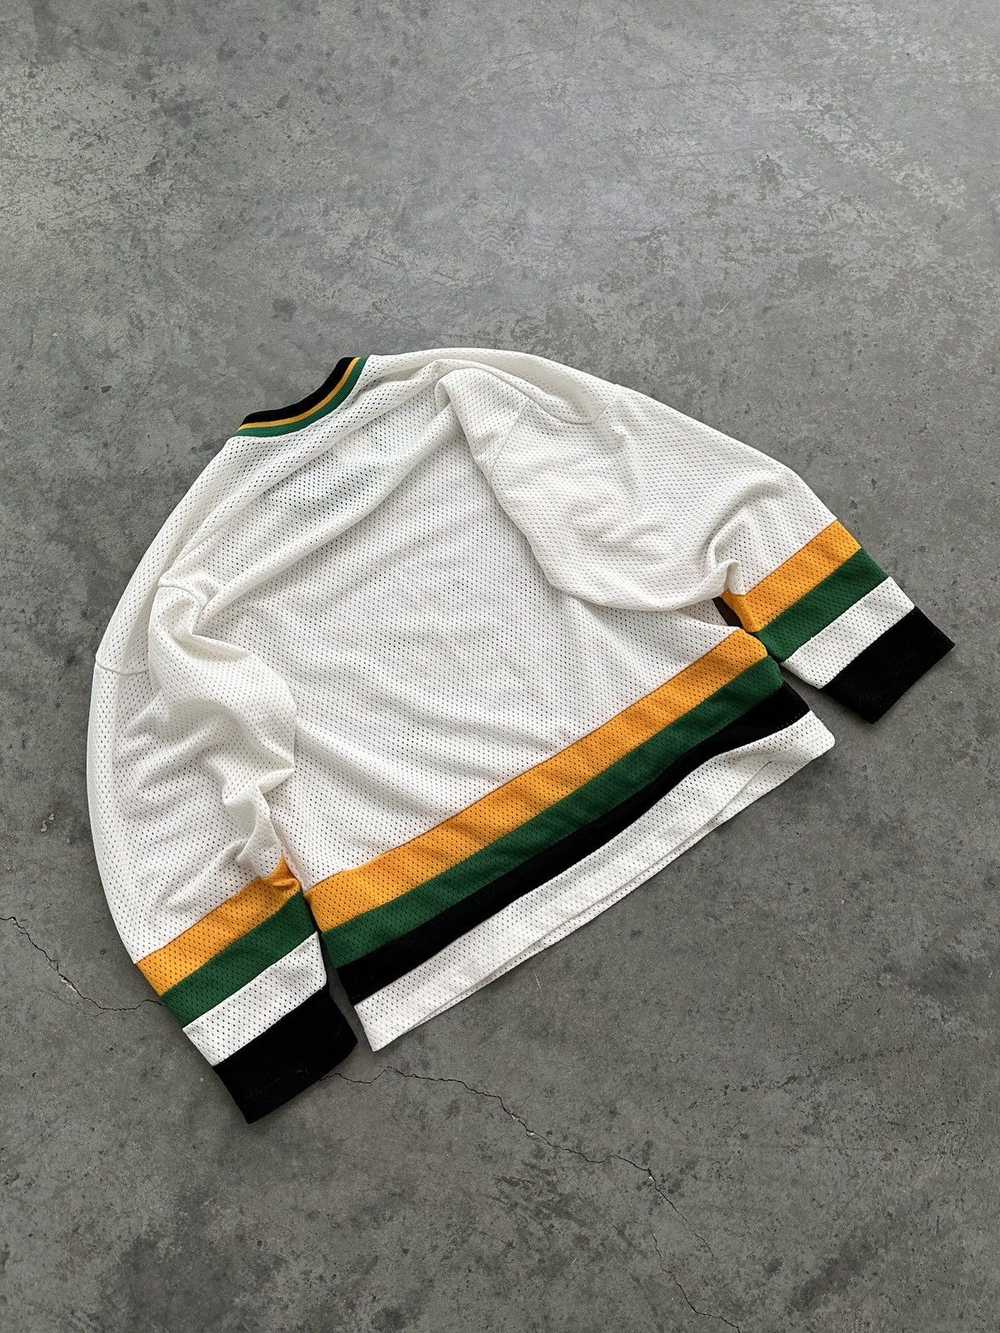 Vintage 1980s Hockey Jersey - image 3